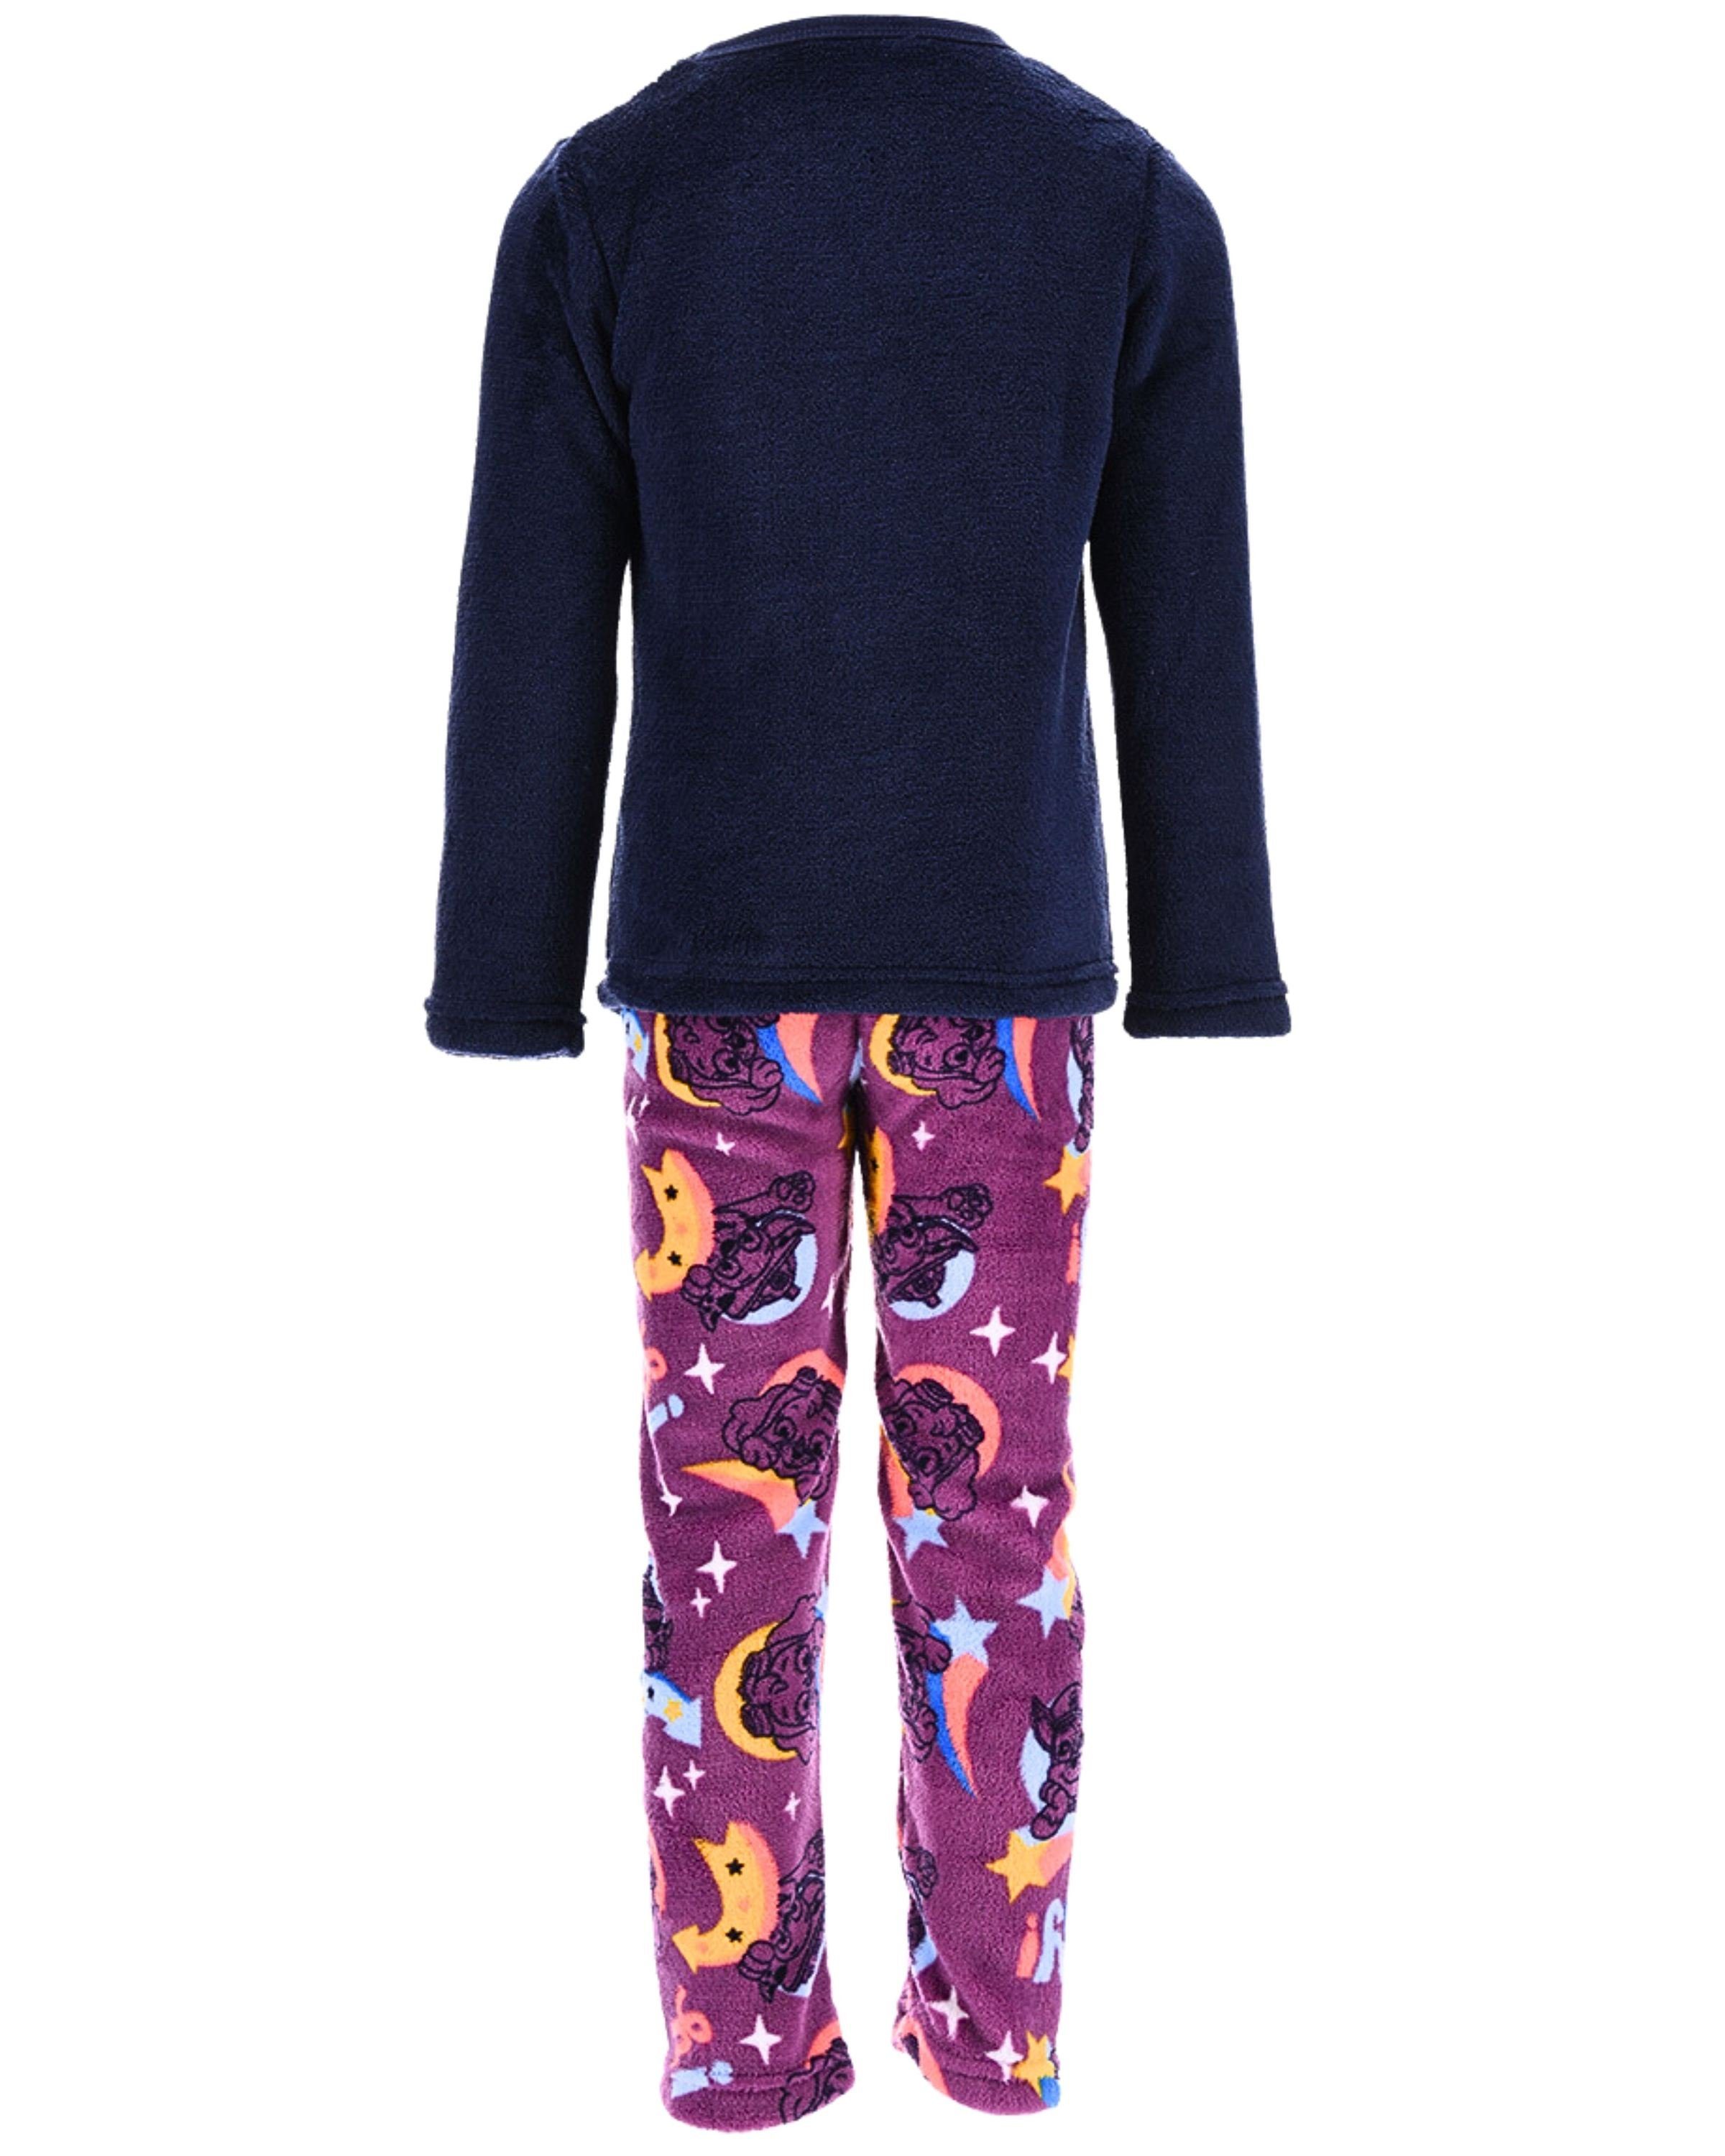 PAW PATROL Schlafanzug aus langarm 98 (2 116 tlg) Mädchen cm Pyjama Gr. Dunkelblau-Lila Fleece Skye weichem 